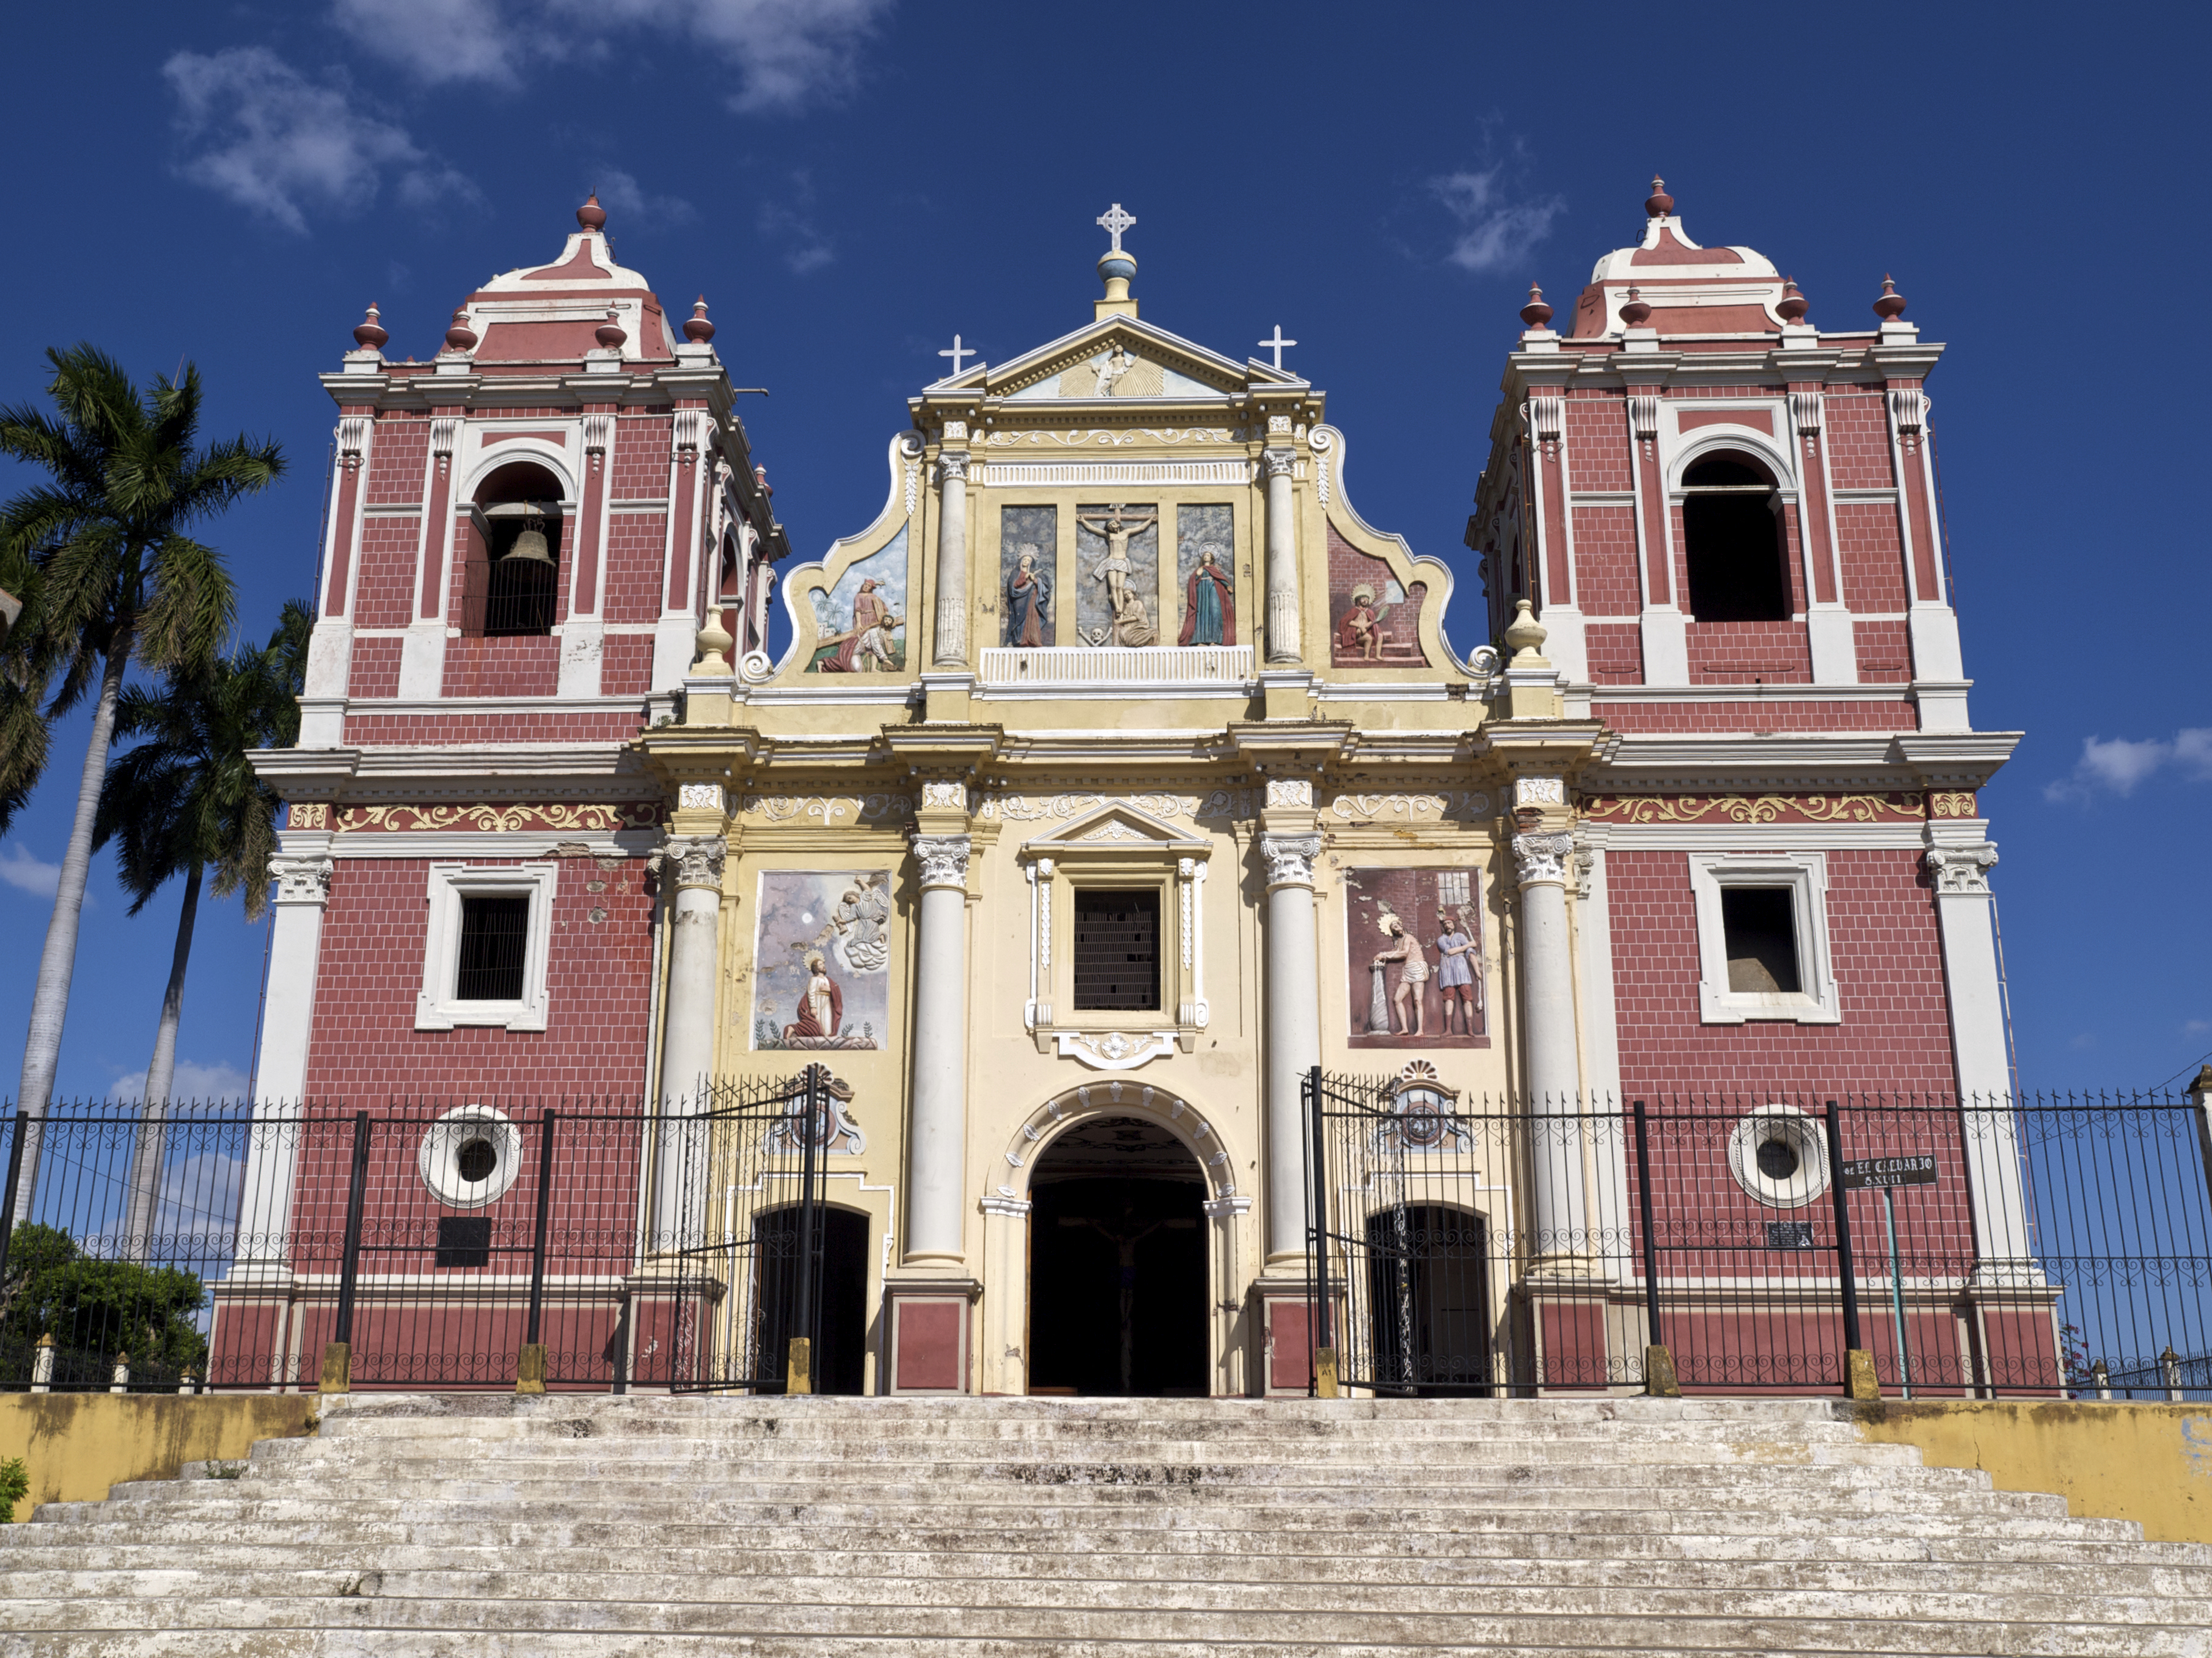 Nicaragua has stunning buildings like Iglesia El Calvario in Leon